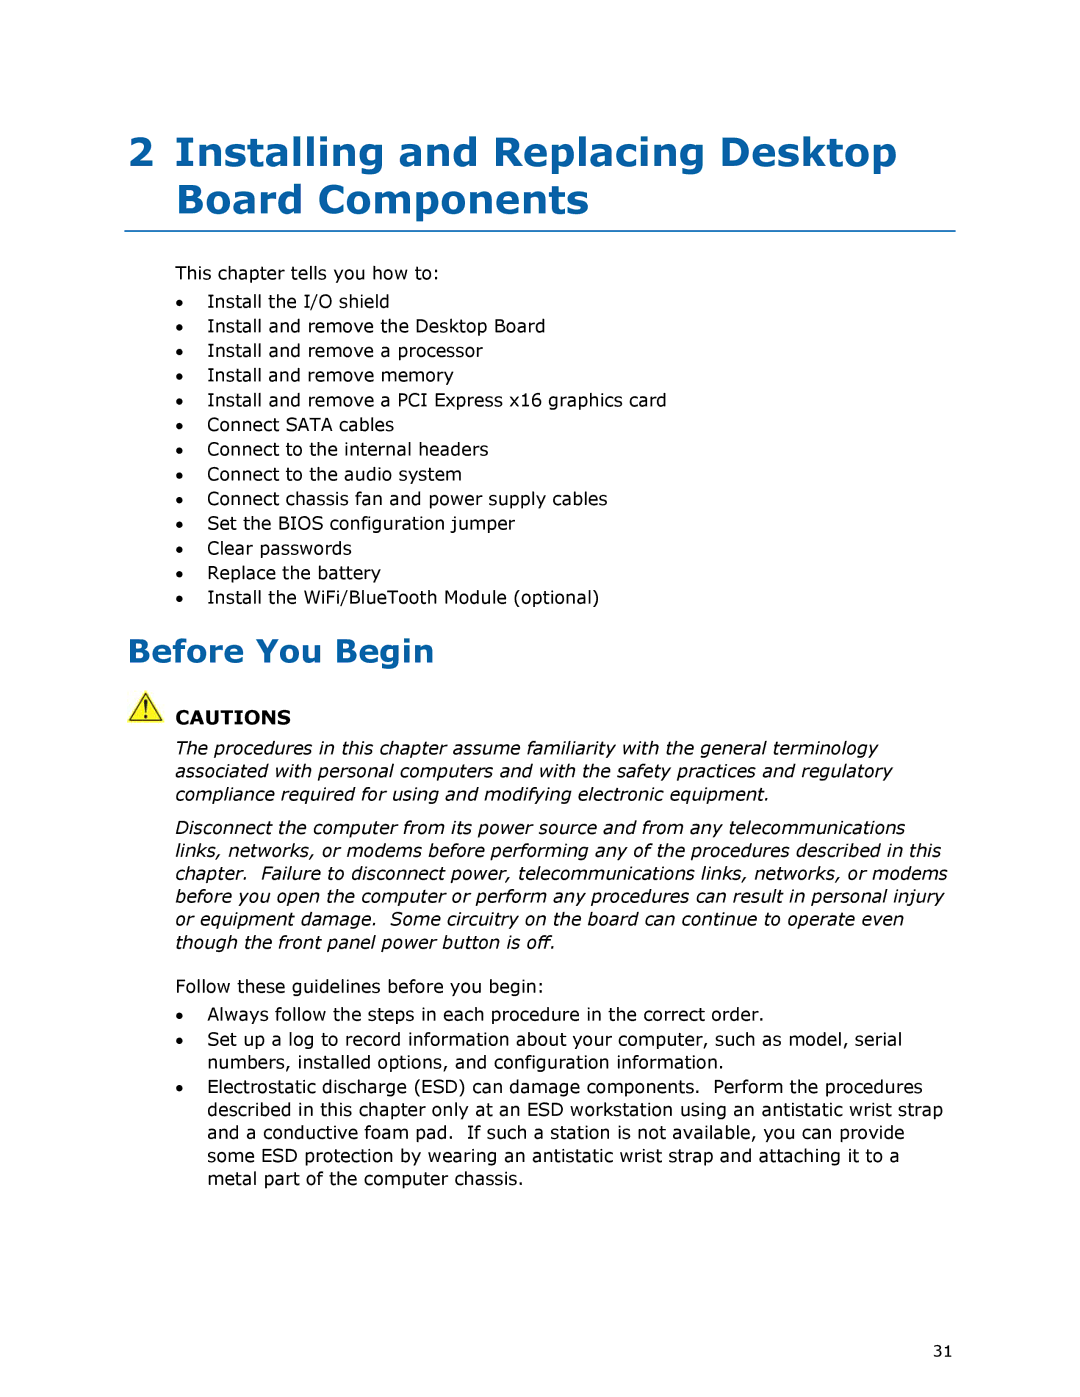 Intel BLKDZ68BC manual Installing and Replacing Desktop Board Components, Before You Begin 